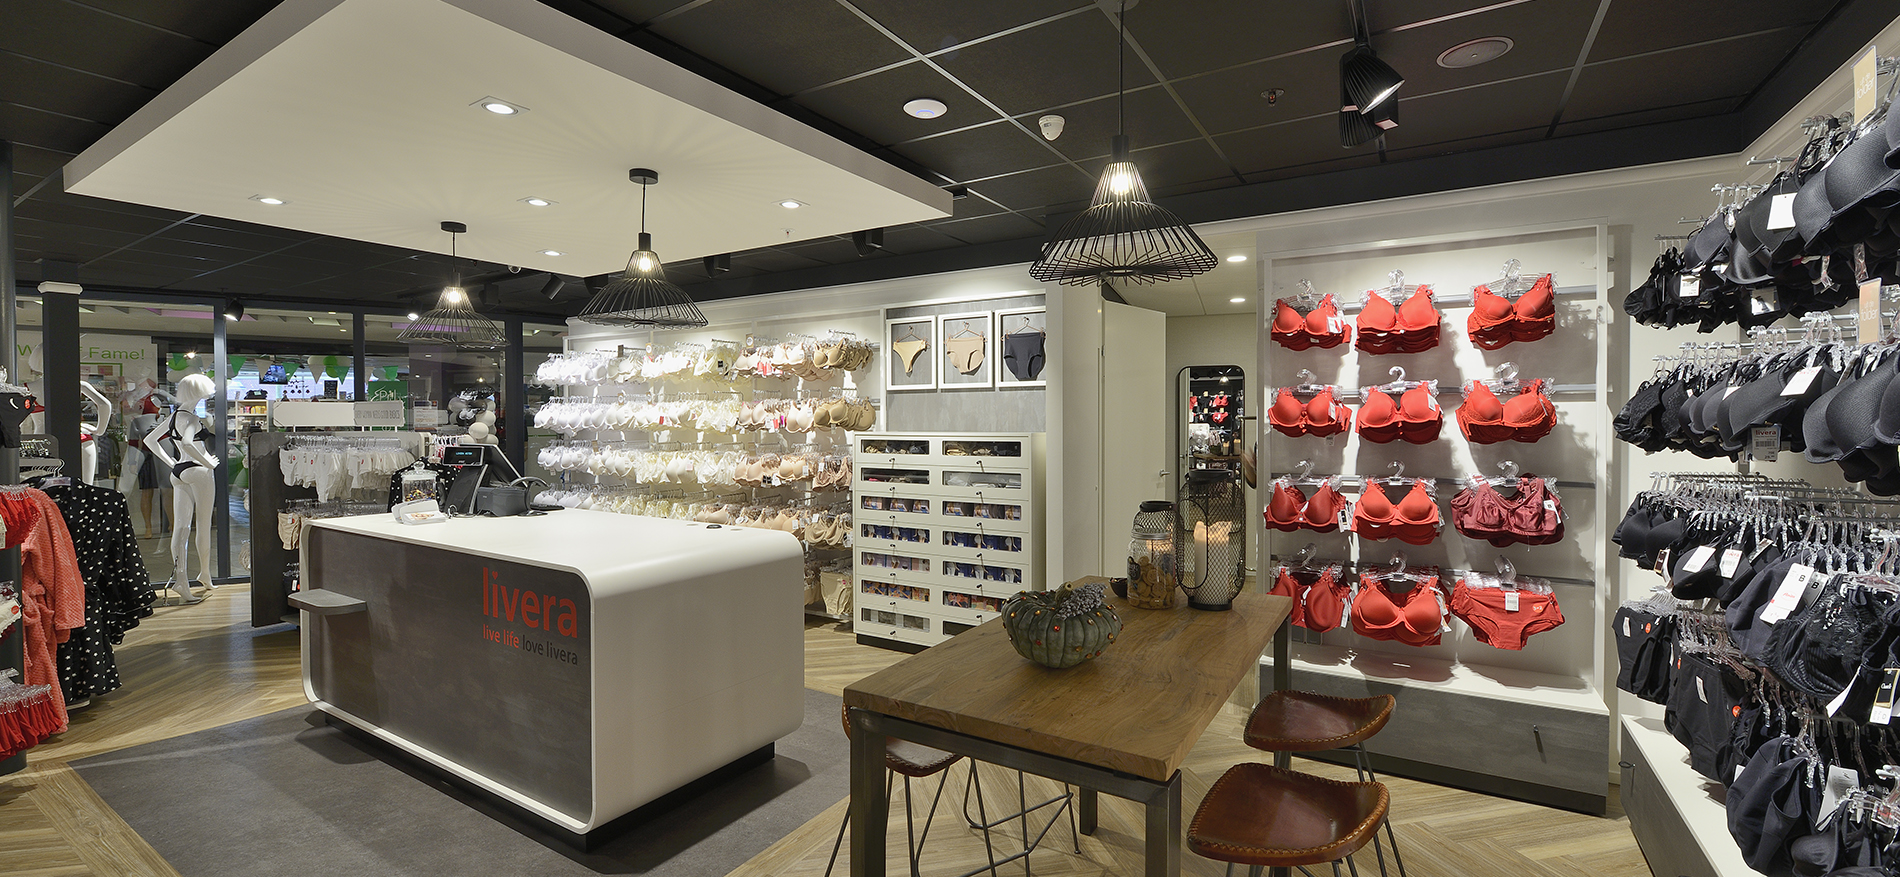 Livera Asten (NL): Design Lingerie Store - 